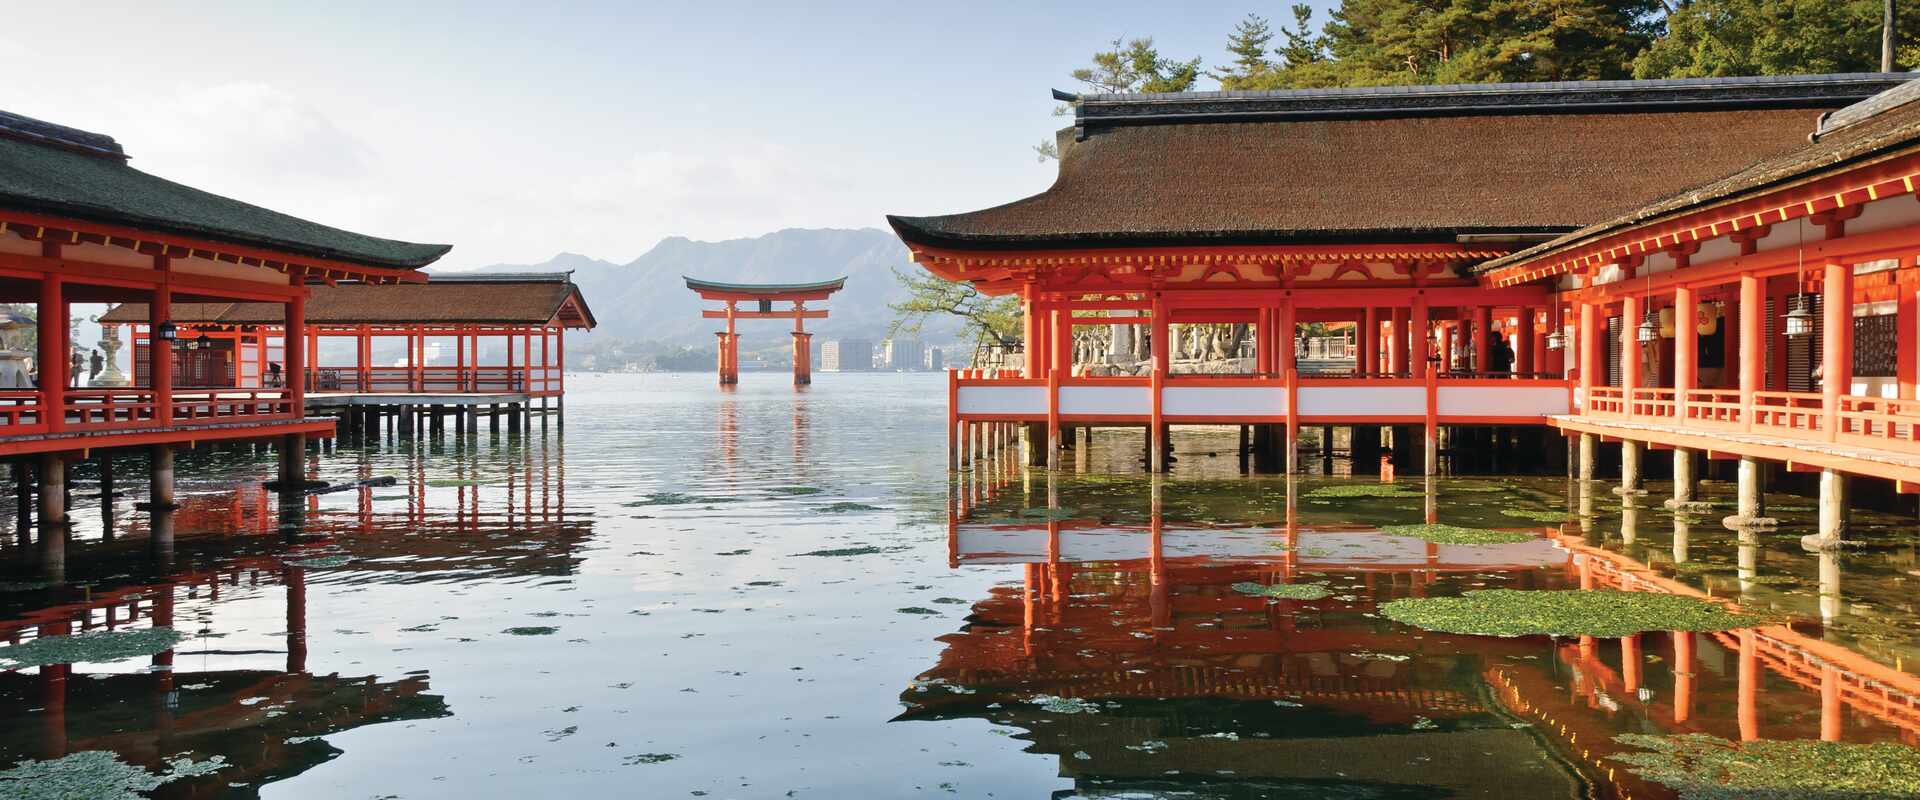 Itsukushima Shire and Torii Gate, Japan